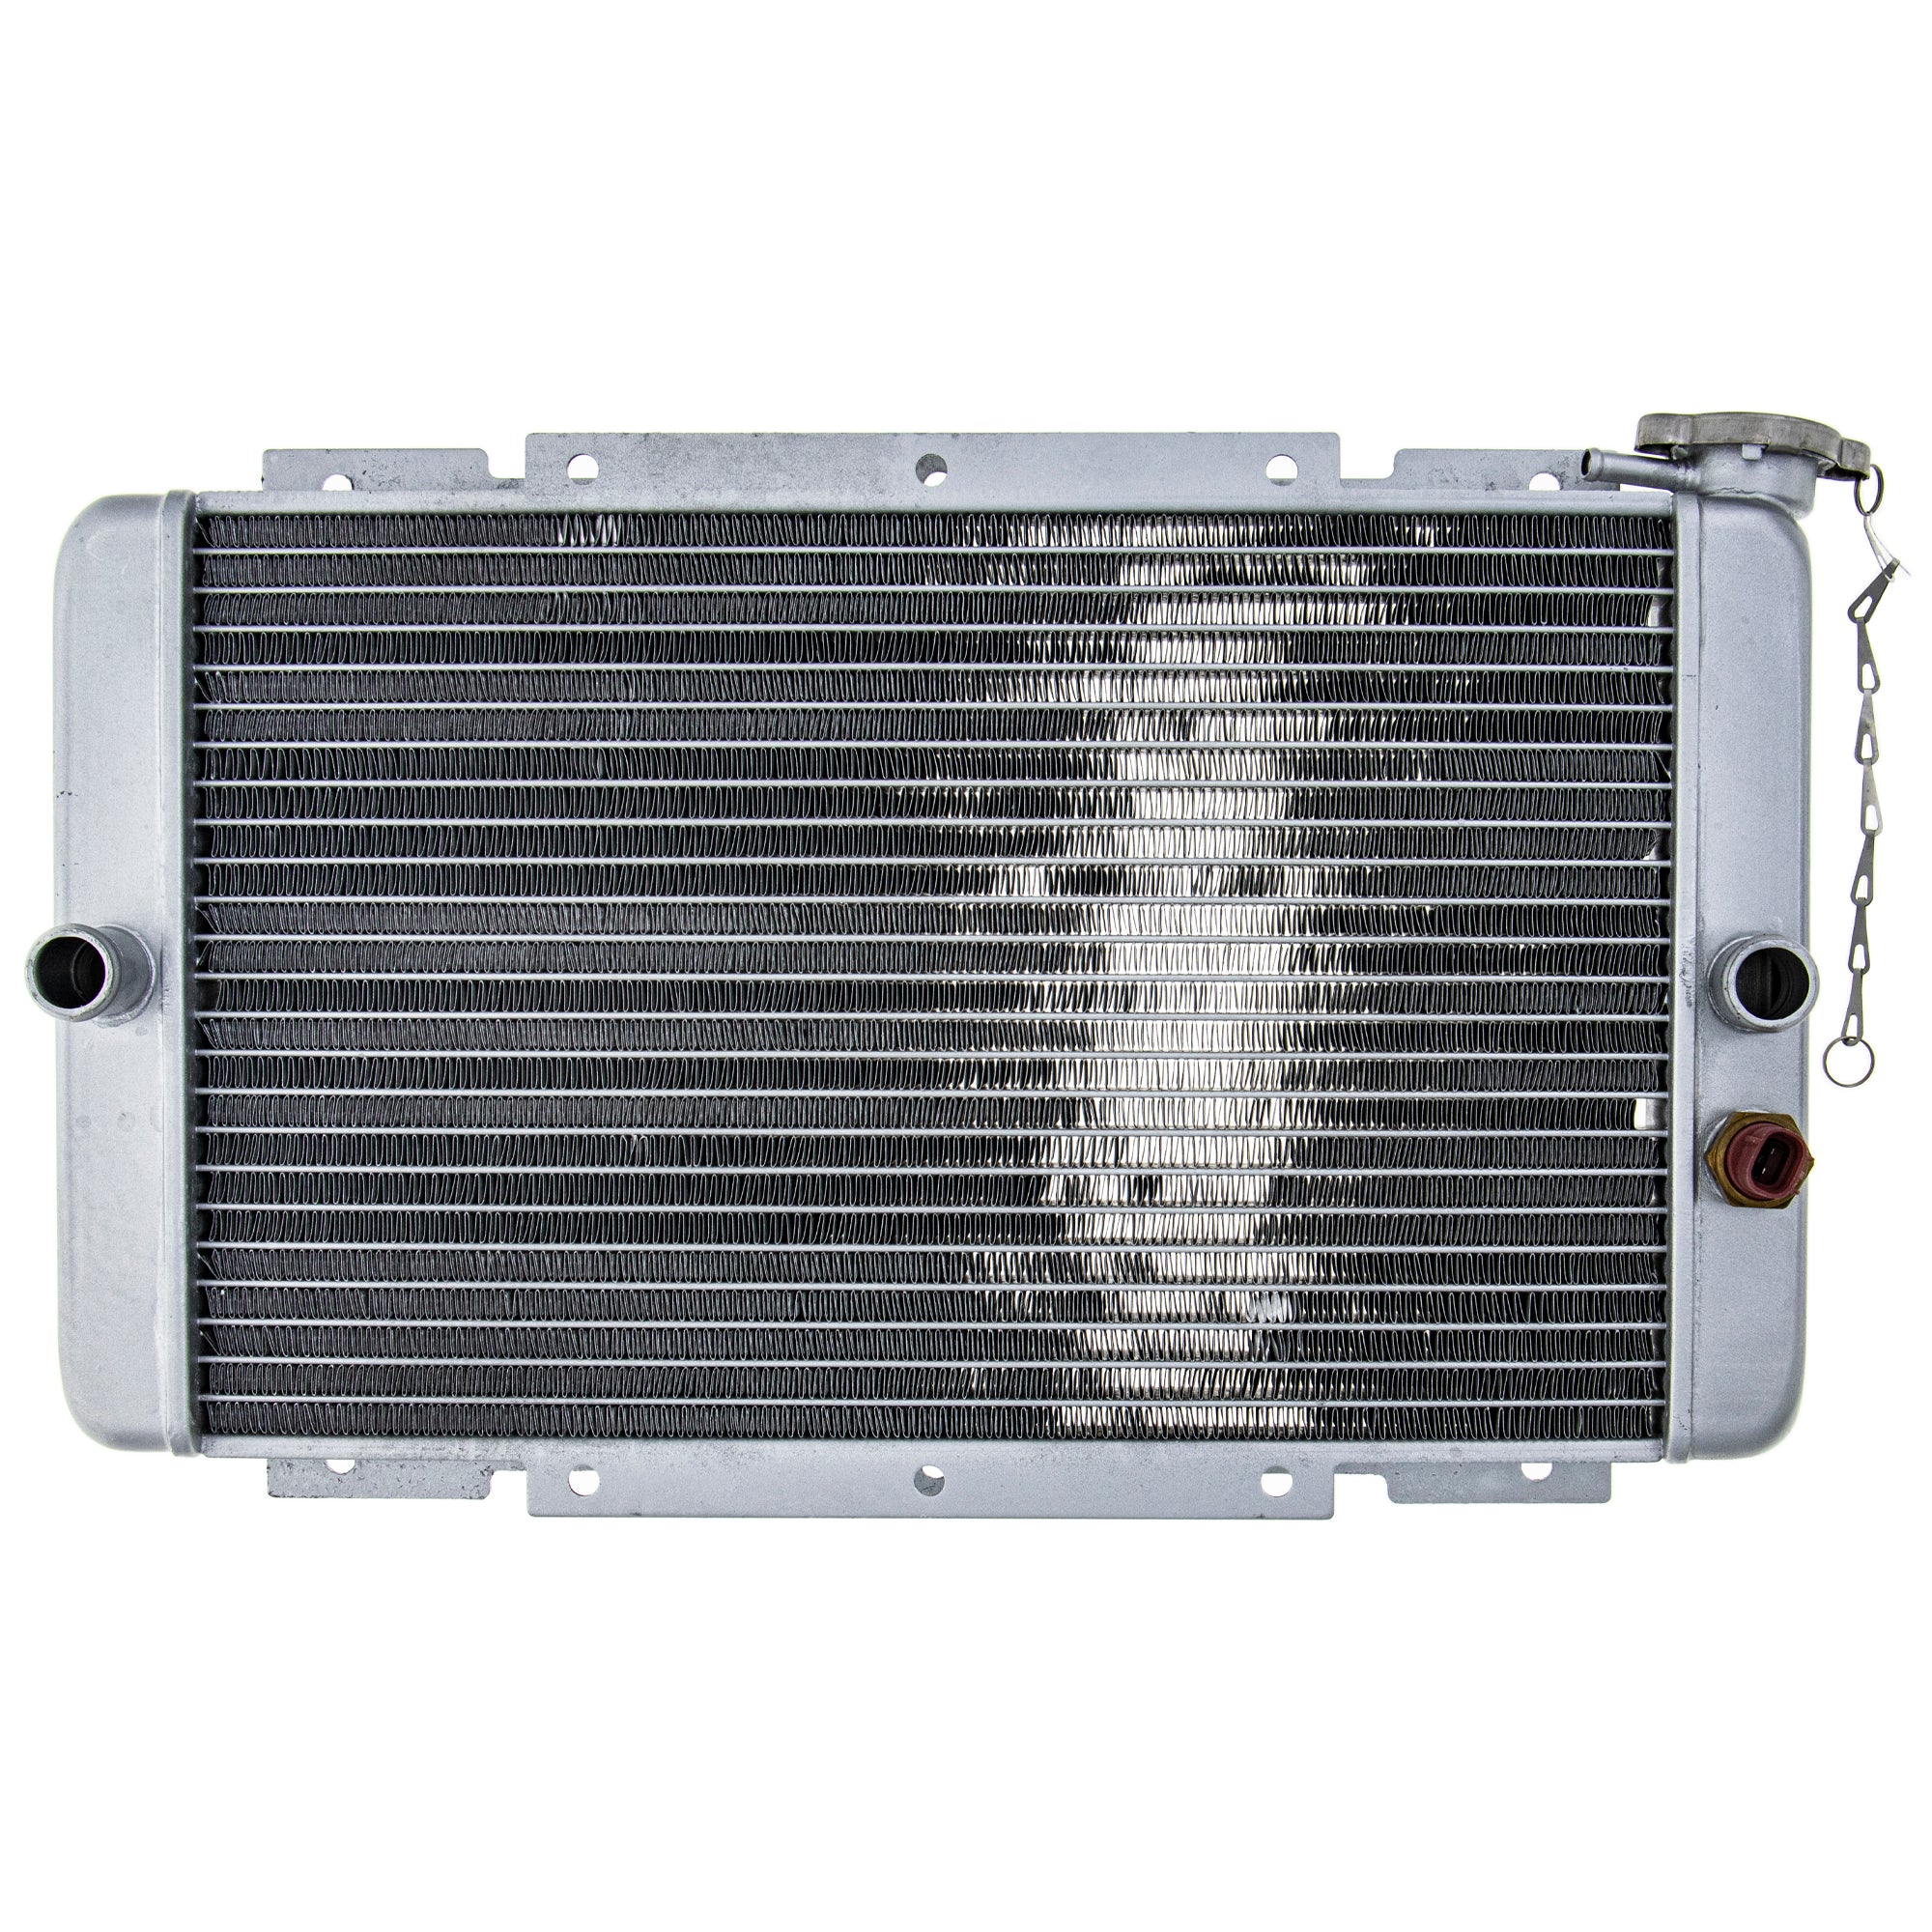 Radiator Assembly 519-KRD2223A For Yamaha